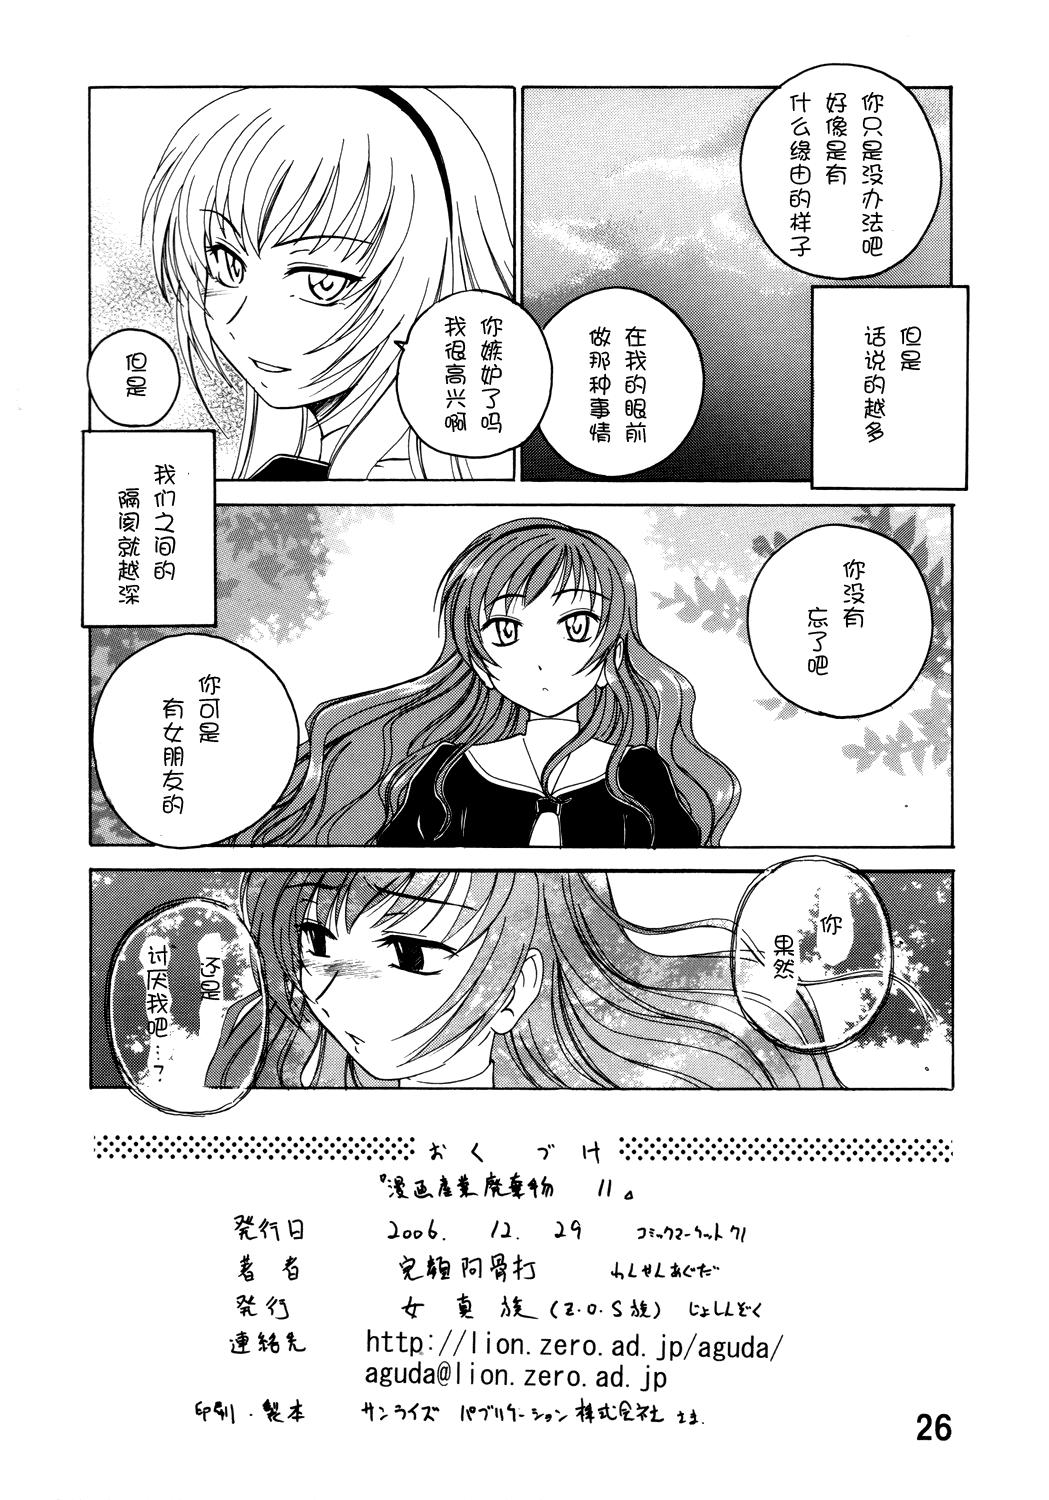 Sensual Manga Sangyou Haikibutsu 11 - Comic Industrial Wastes 11 - Princess princess Femdom Pov - Page 25